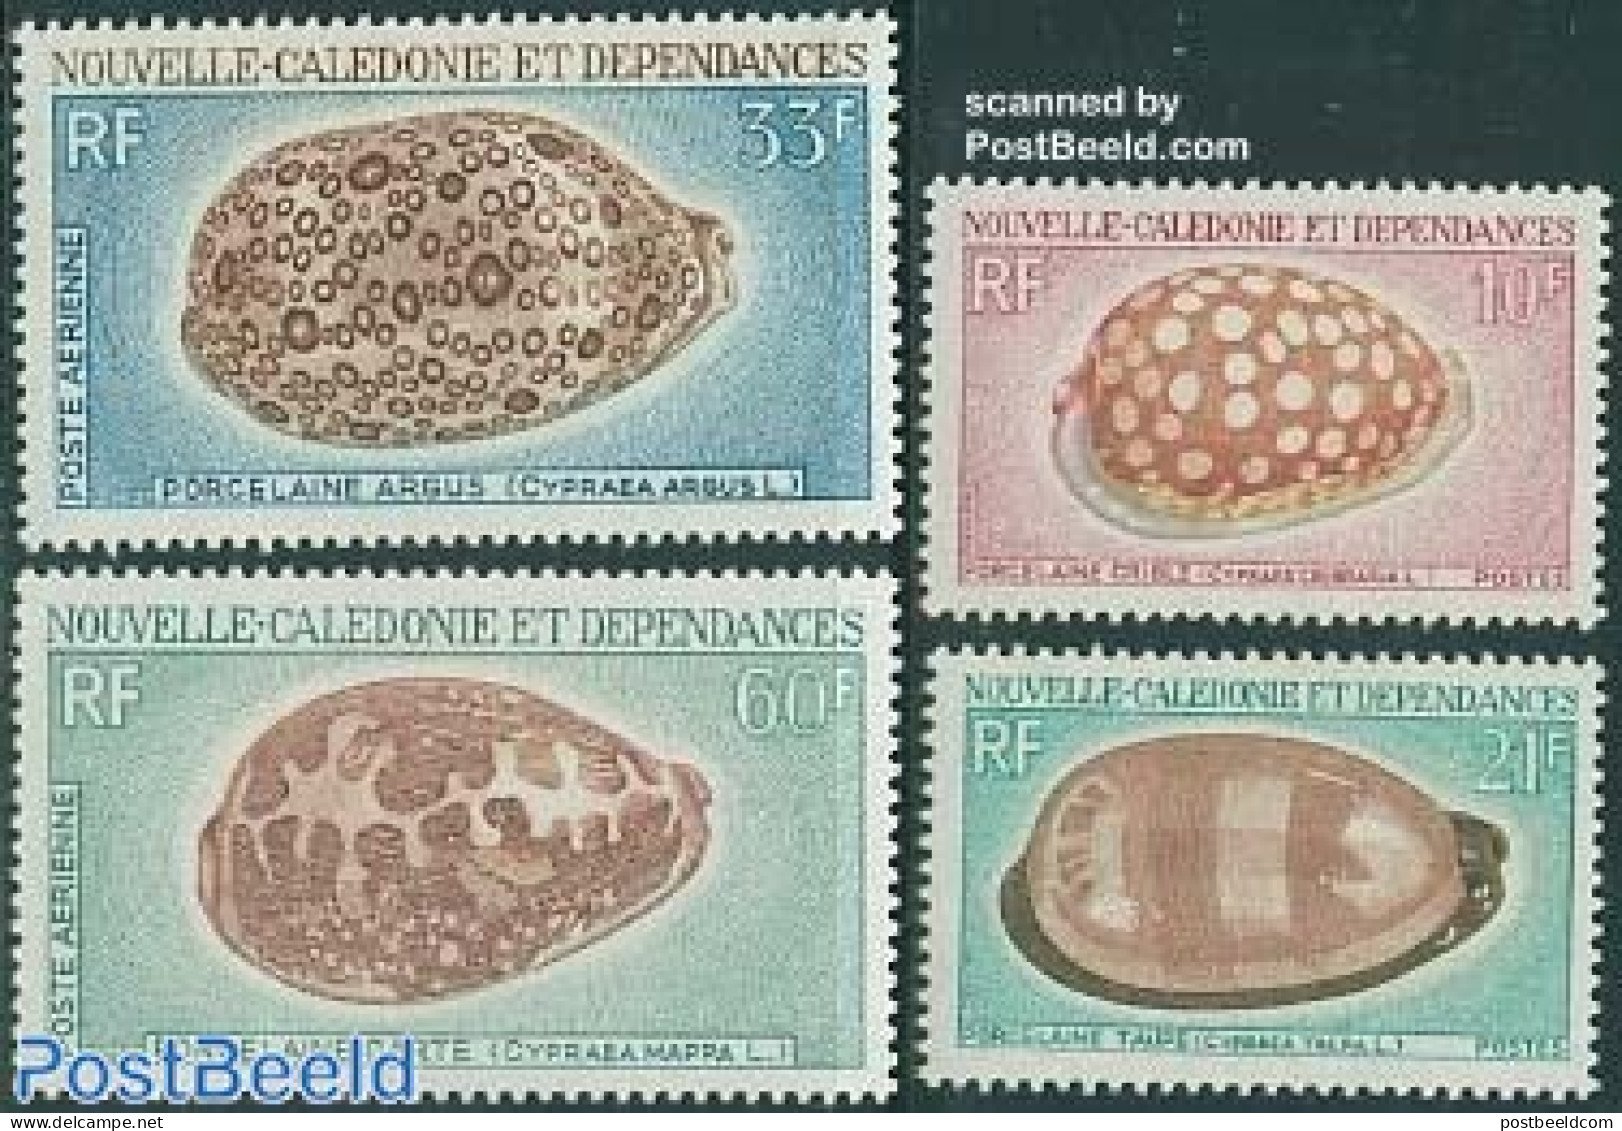 New Caledonia 1970 Shells 4v, Mint NH, Nature - Shells & Crustaceans - Neufs